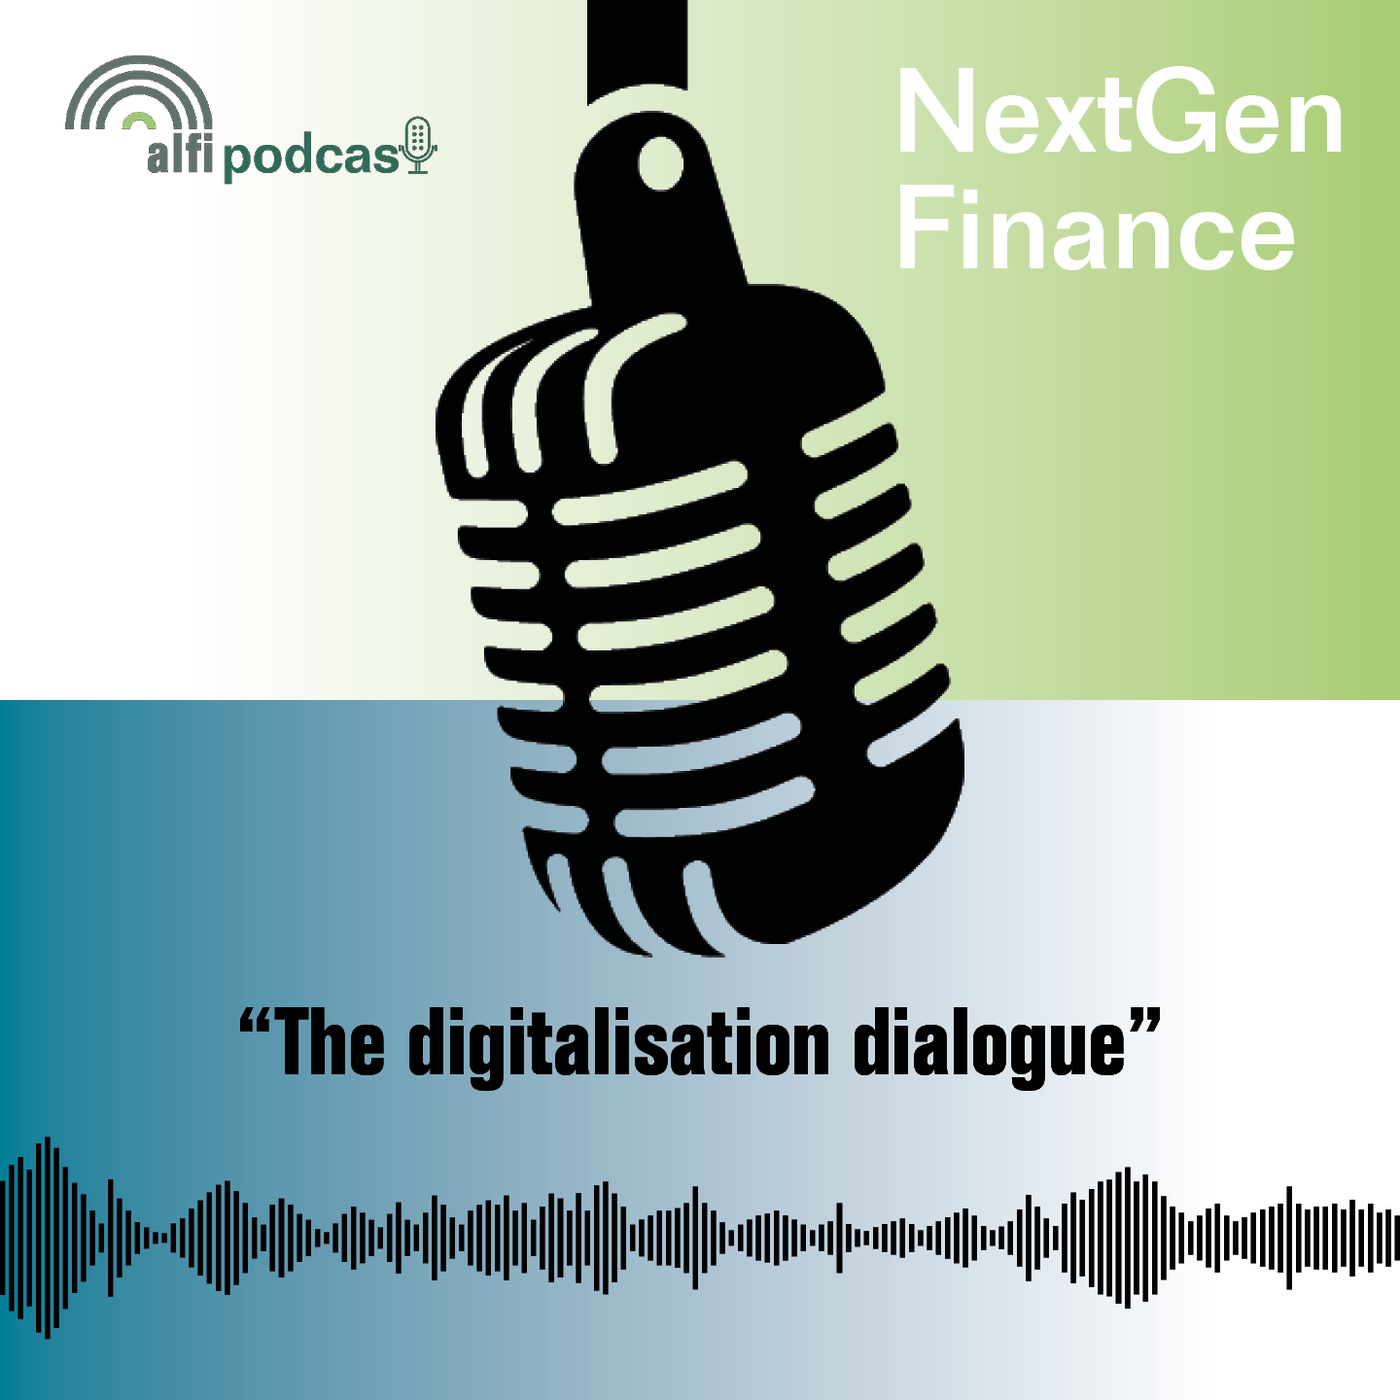 The digitalisation dialogue